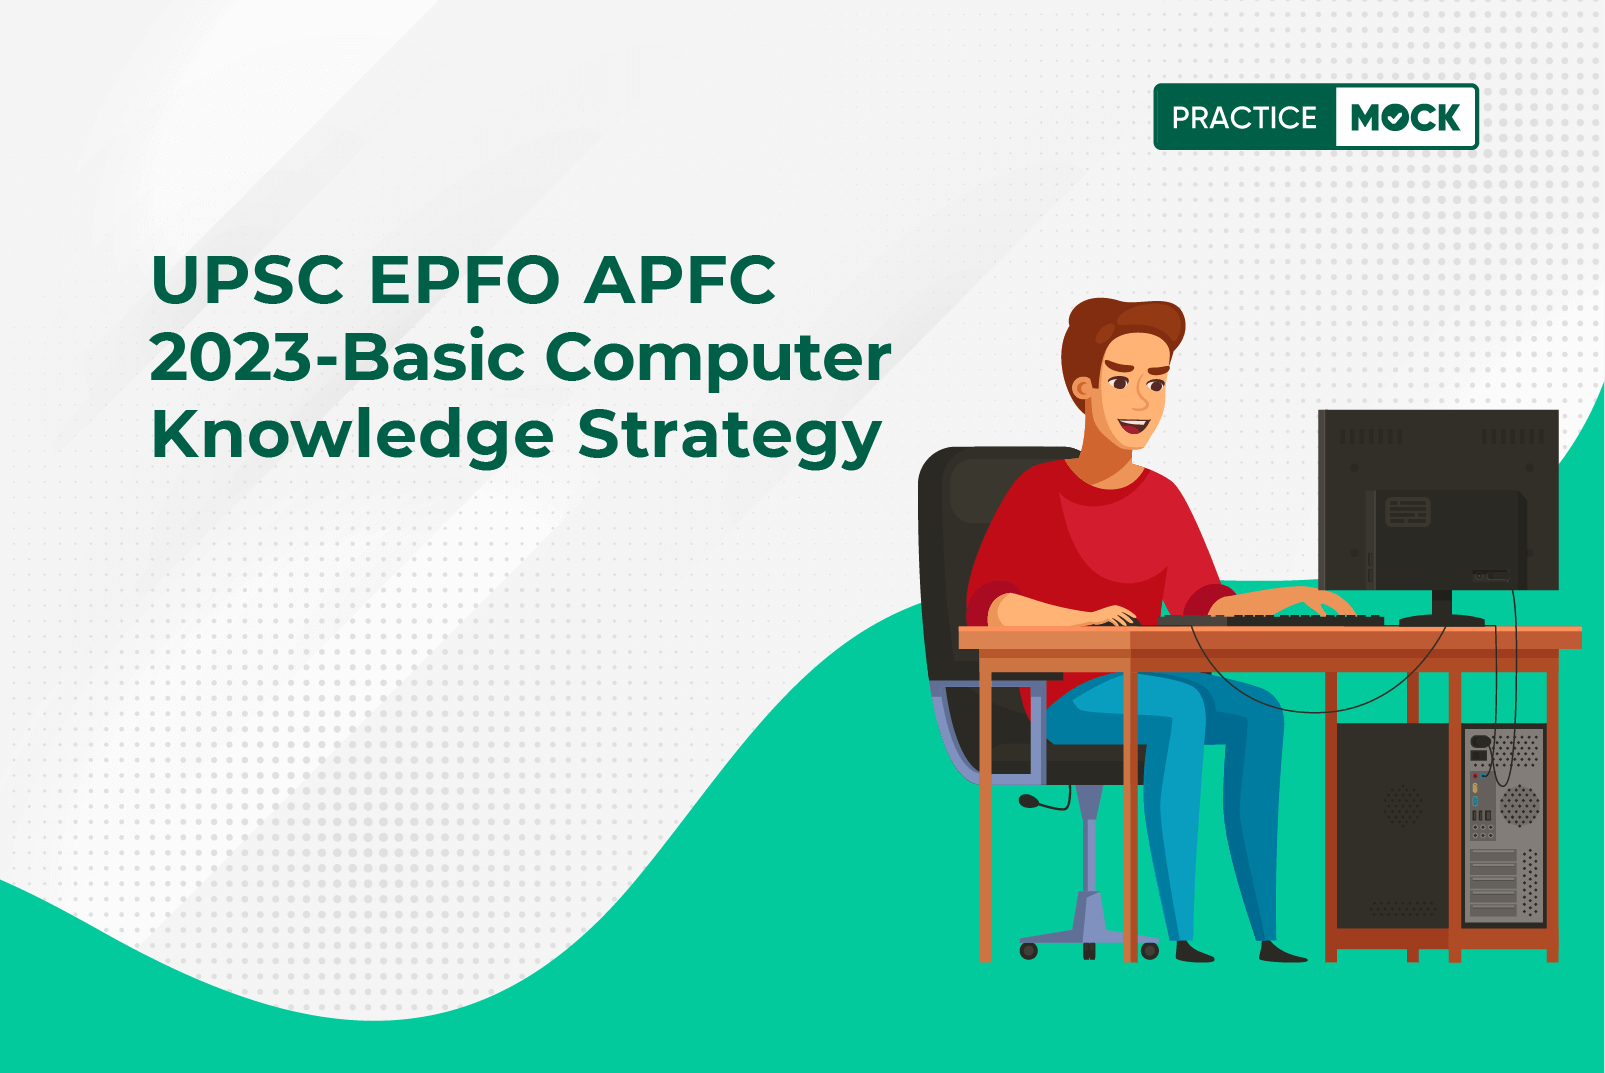 UPSC EPFO APFC 2023-Basic Computer Knowledge Strategy